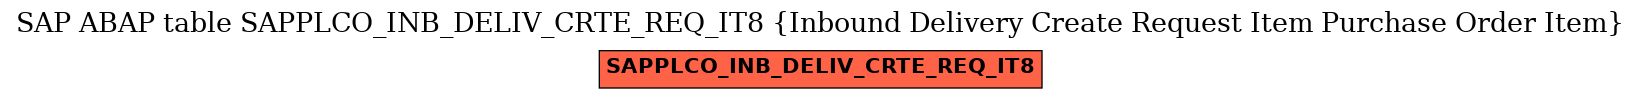 E-R Diagram for table SAPPLCO_INB_DELIV_CRTE_REQ_IT8 (Inbound Delivery Create Request Item Purchase Order Item)